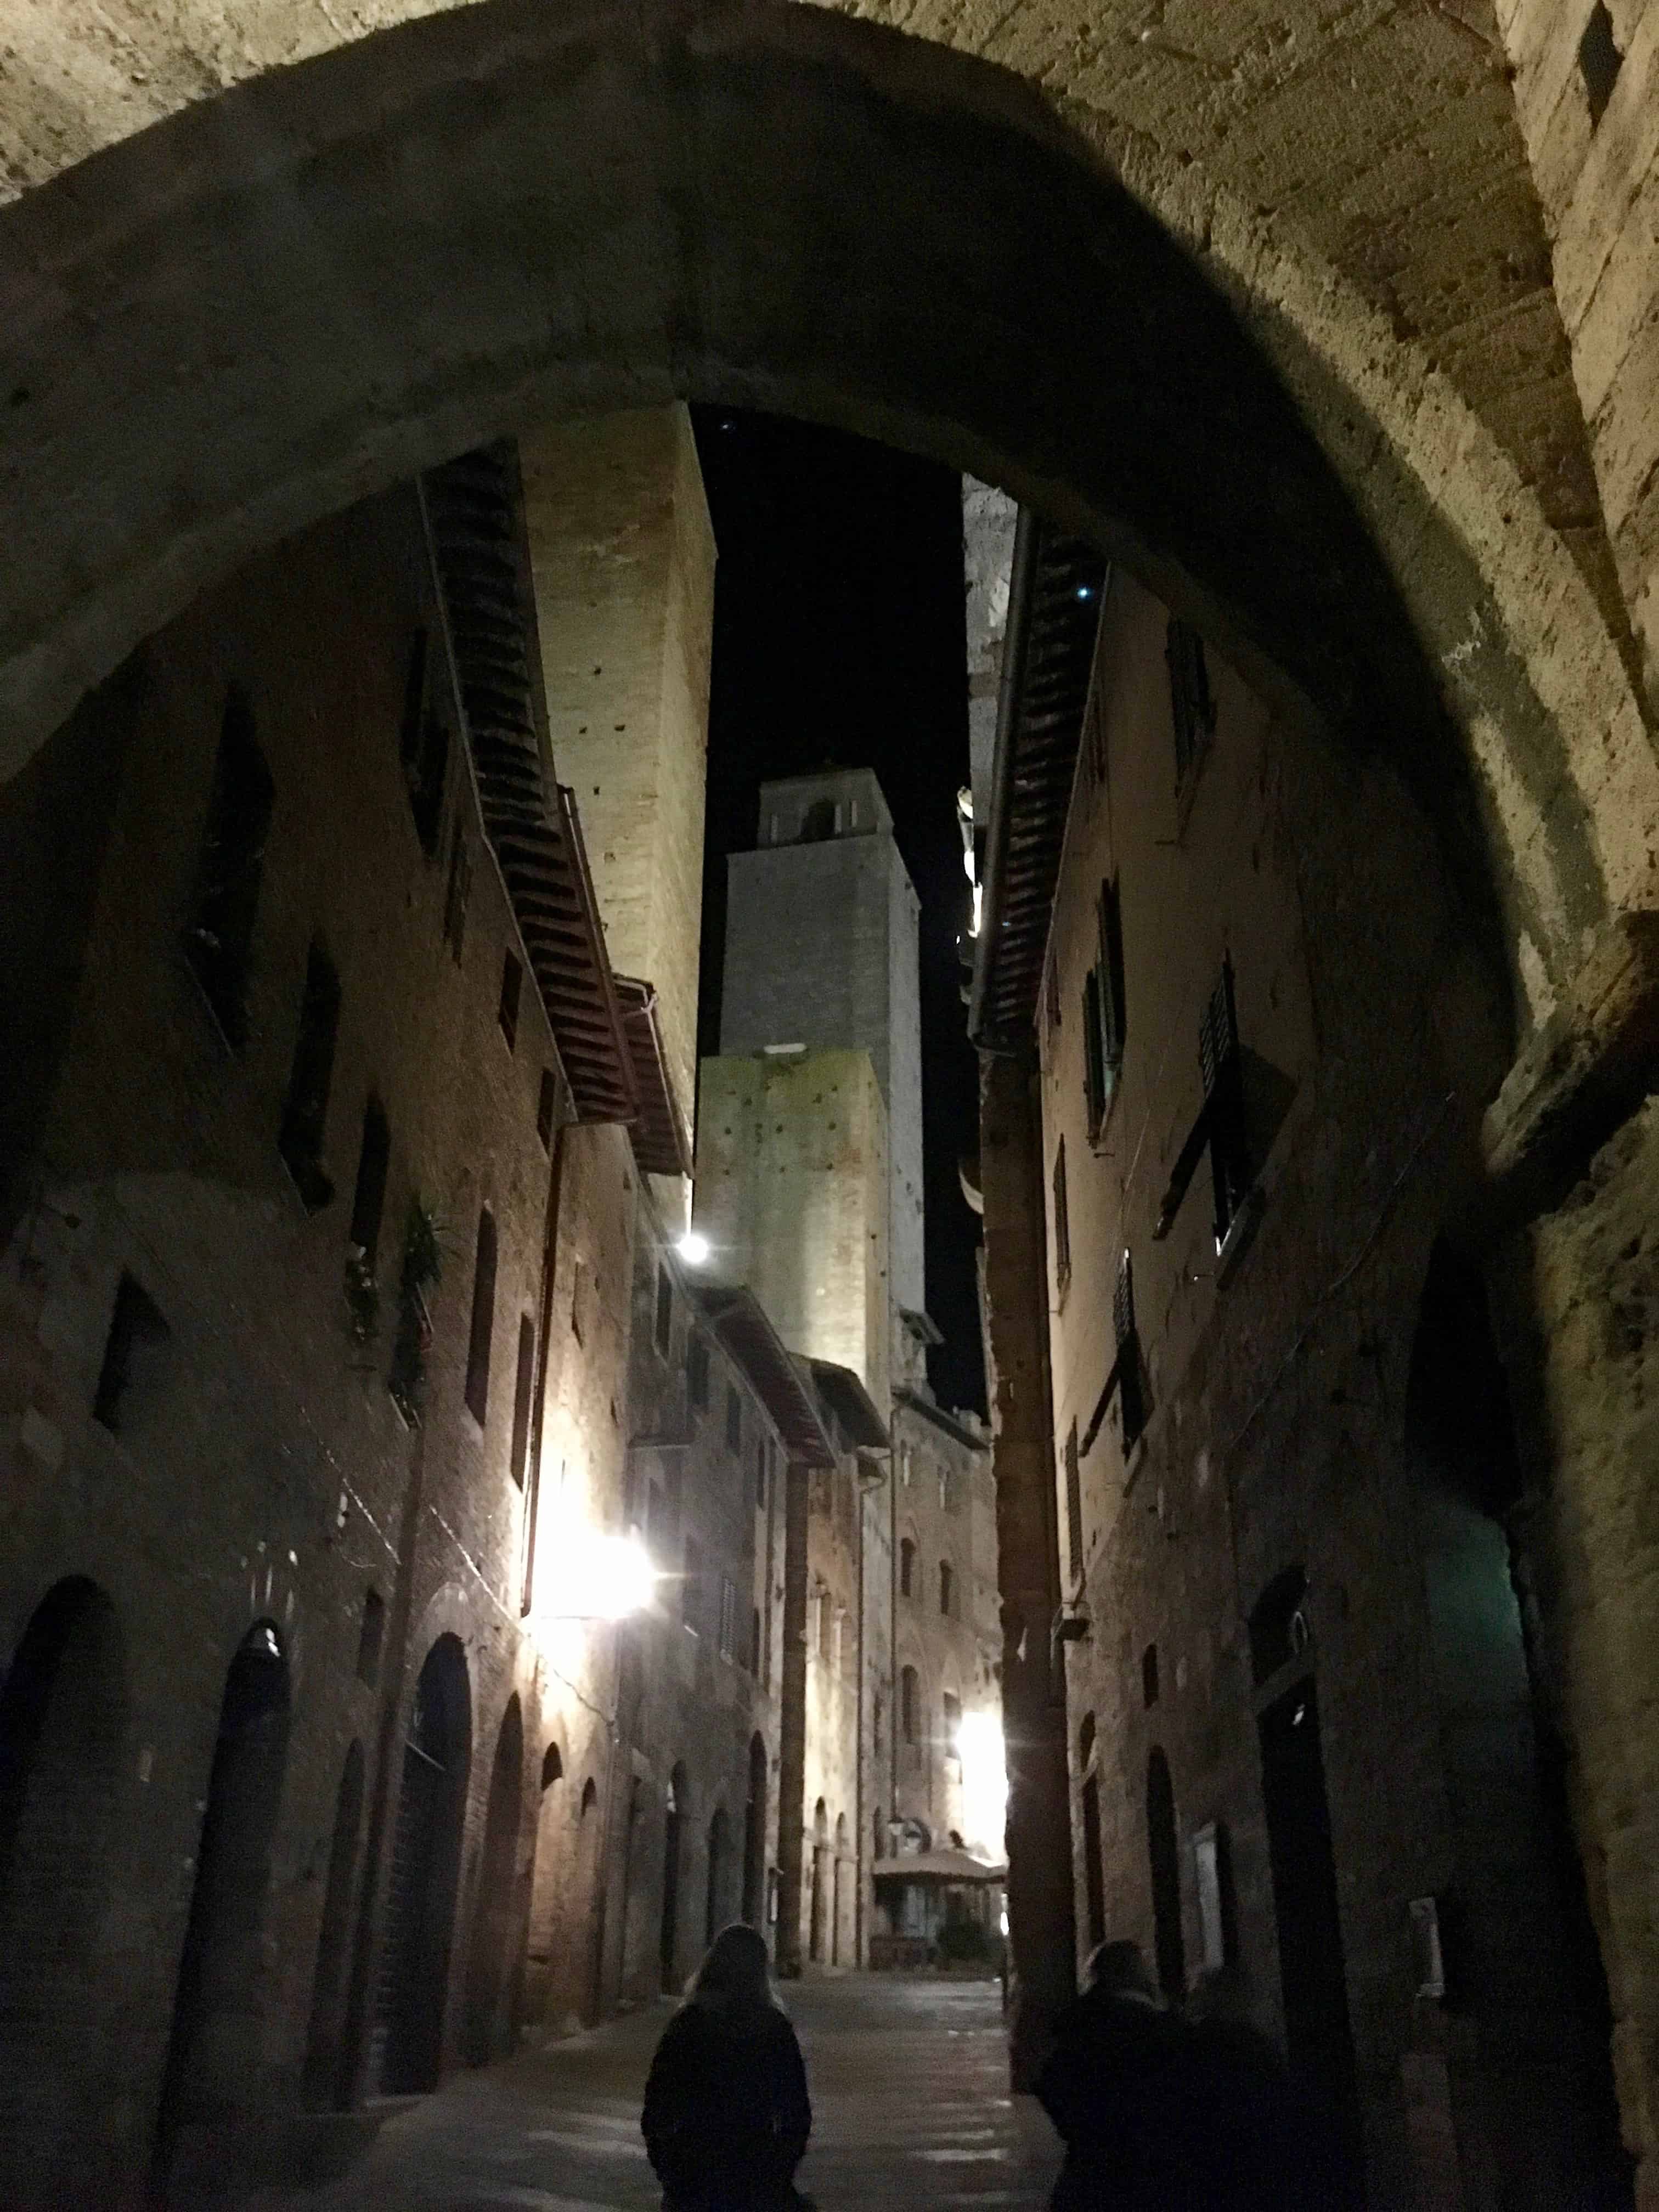 Streetscape by night in San Gimignano, Italy